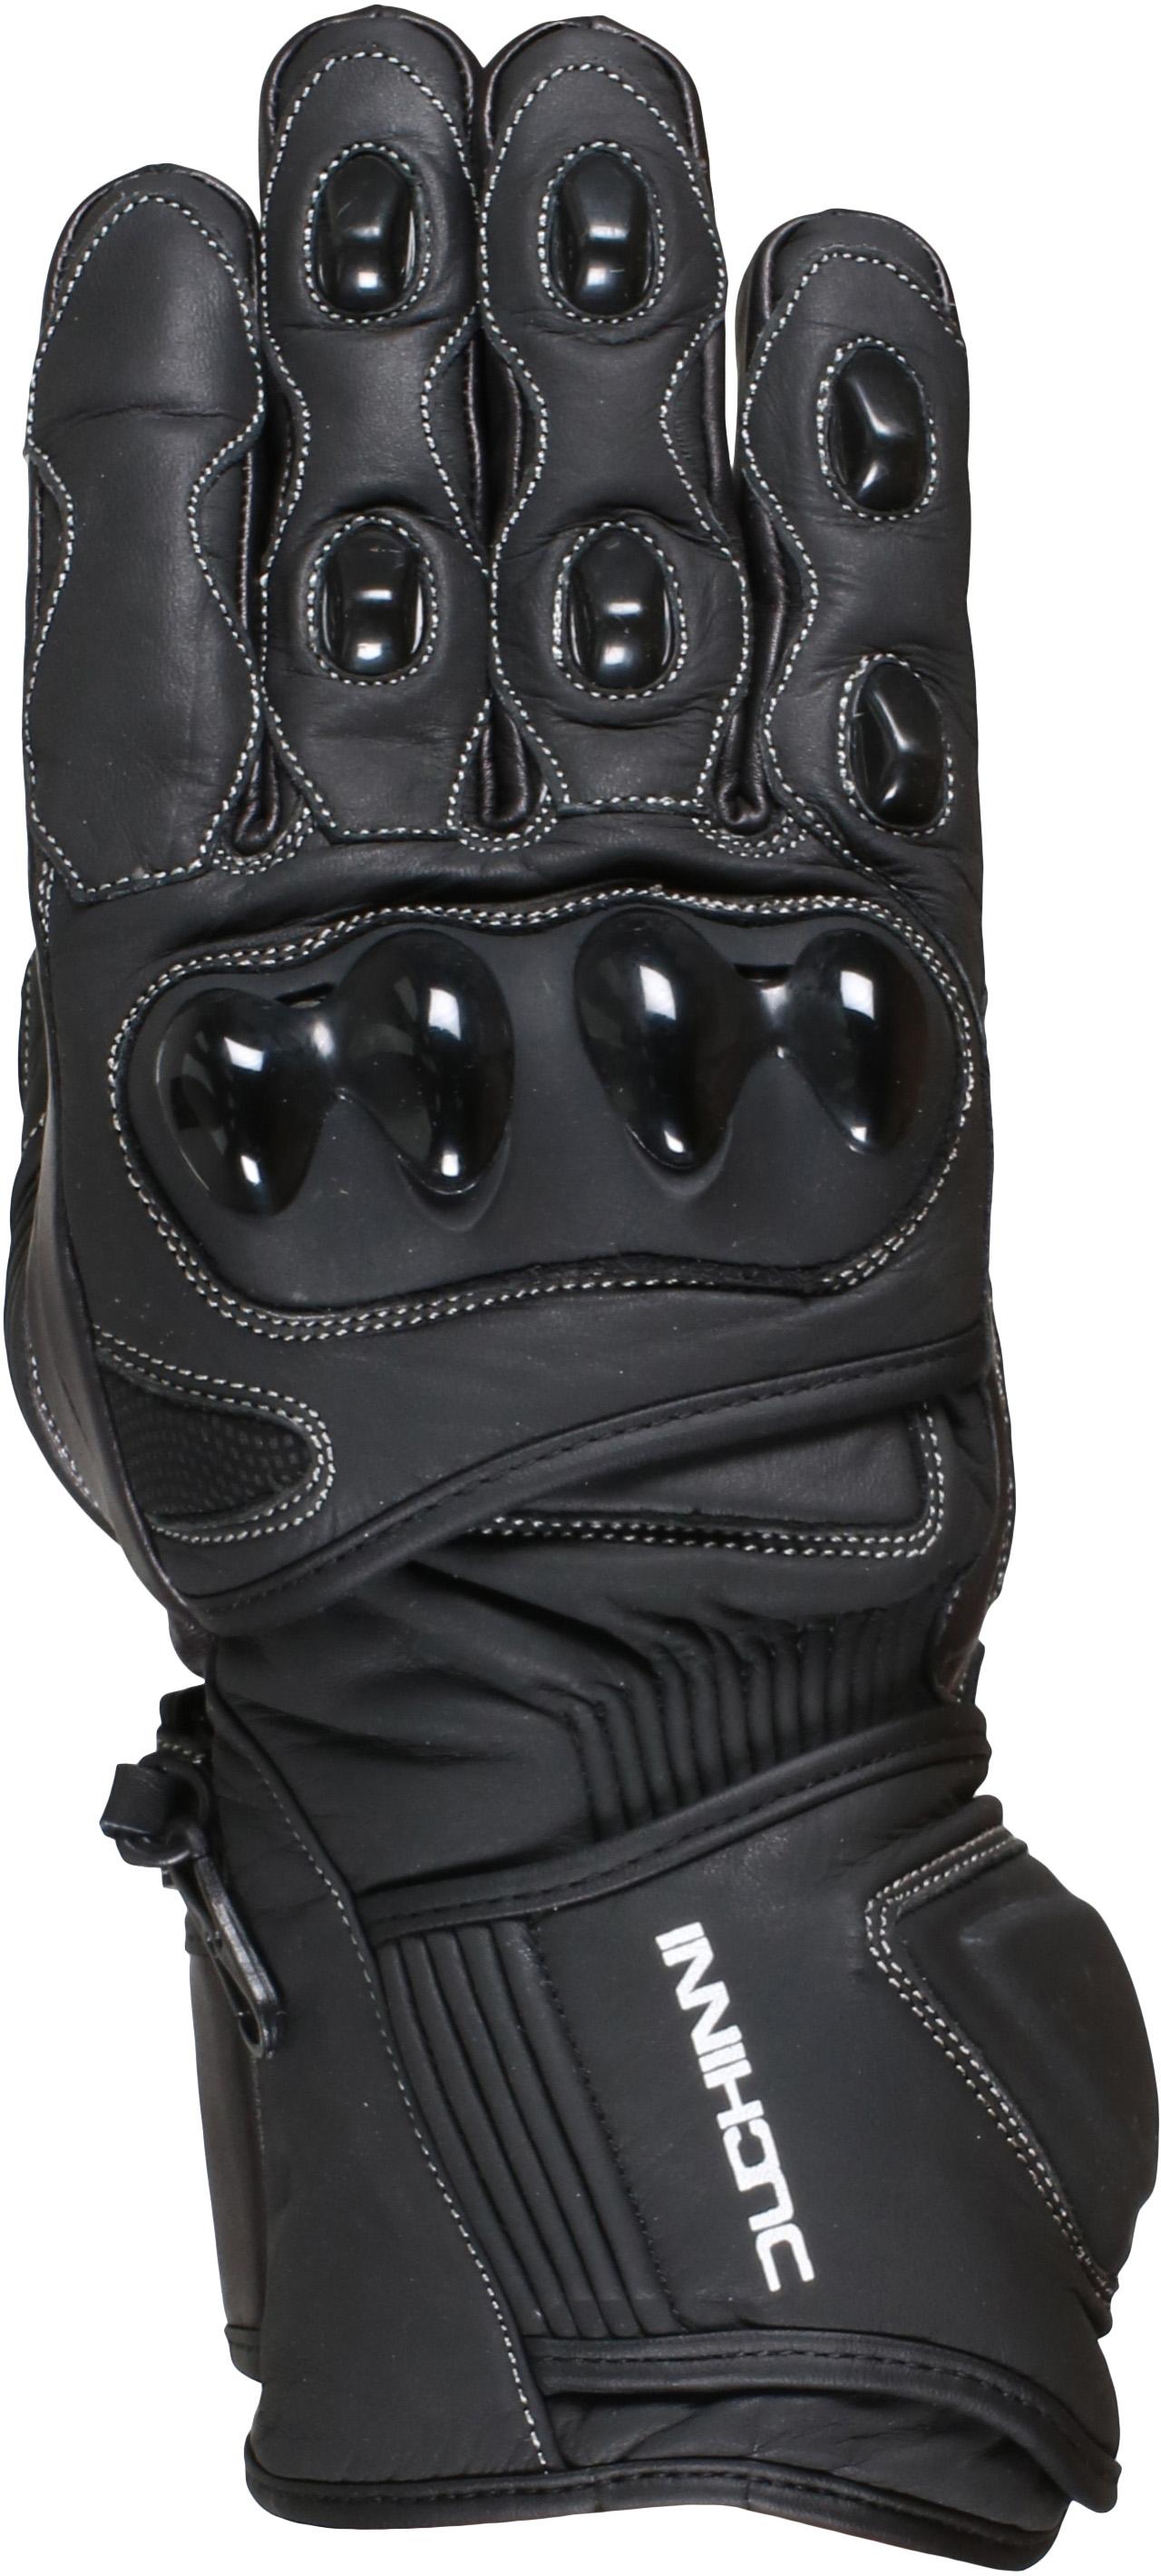 Duchinni Spartan Motorcycle Gloves - Black, S